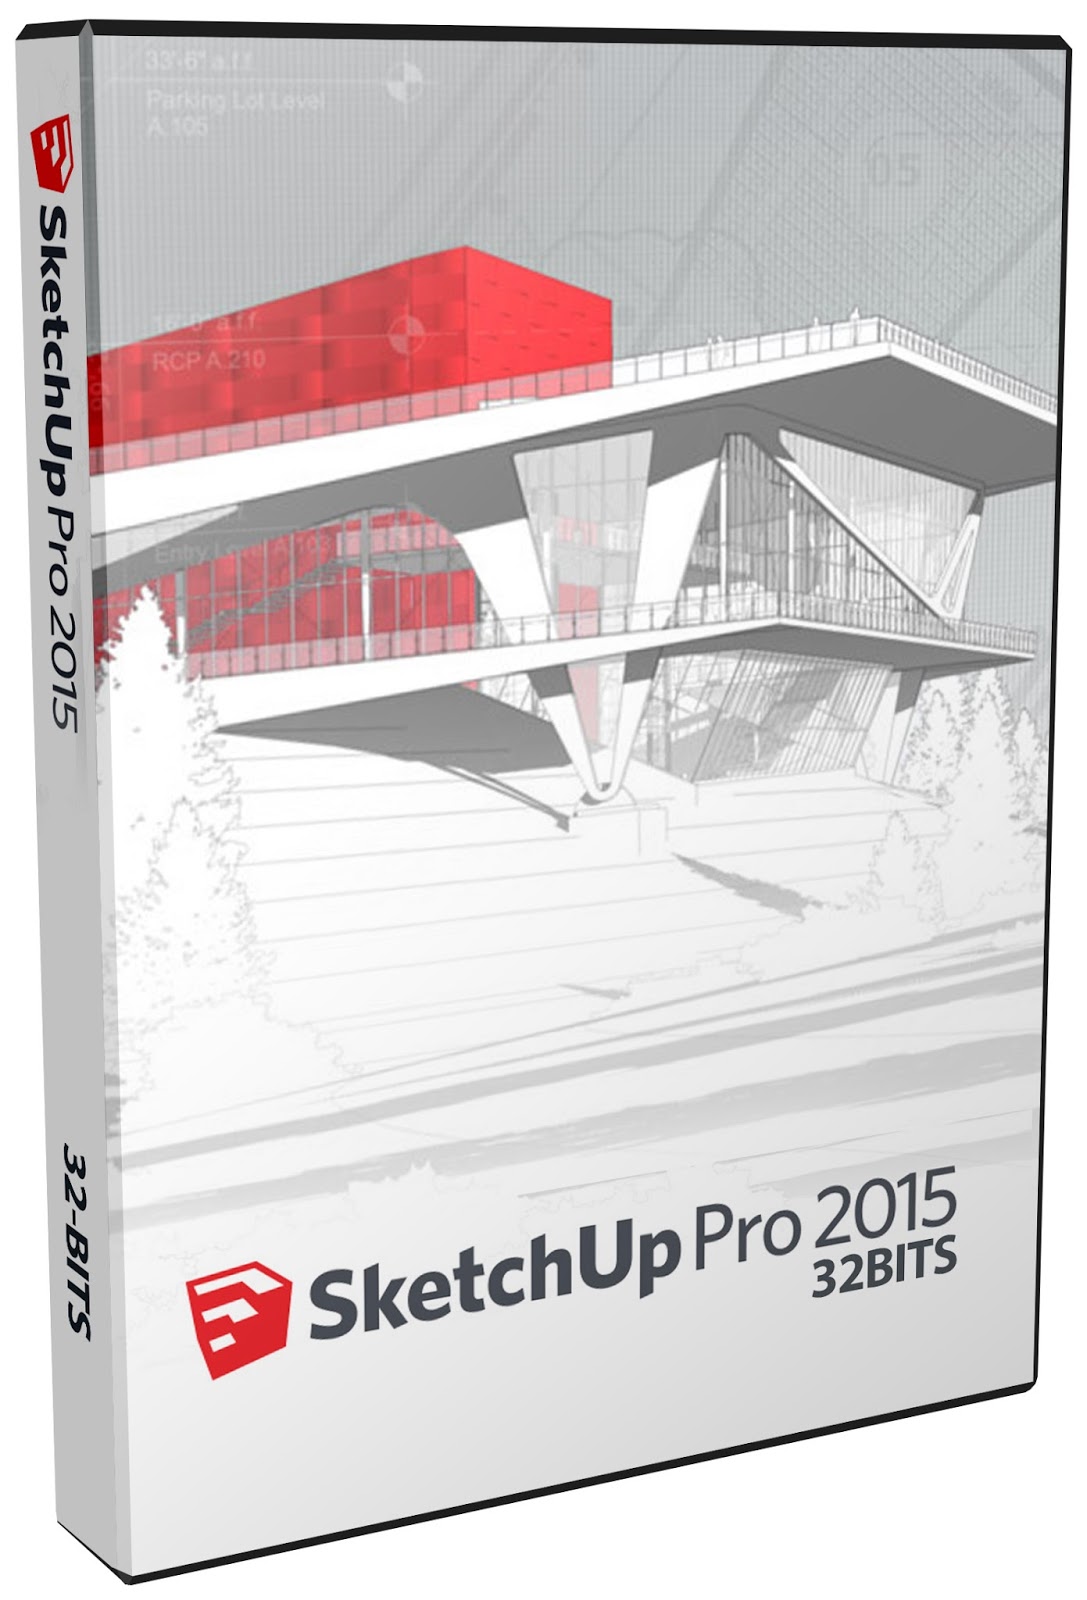 sketchup pro 2015 free download